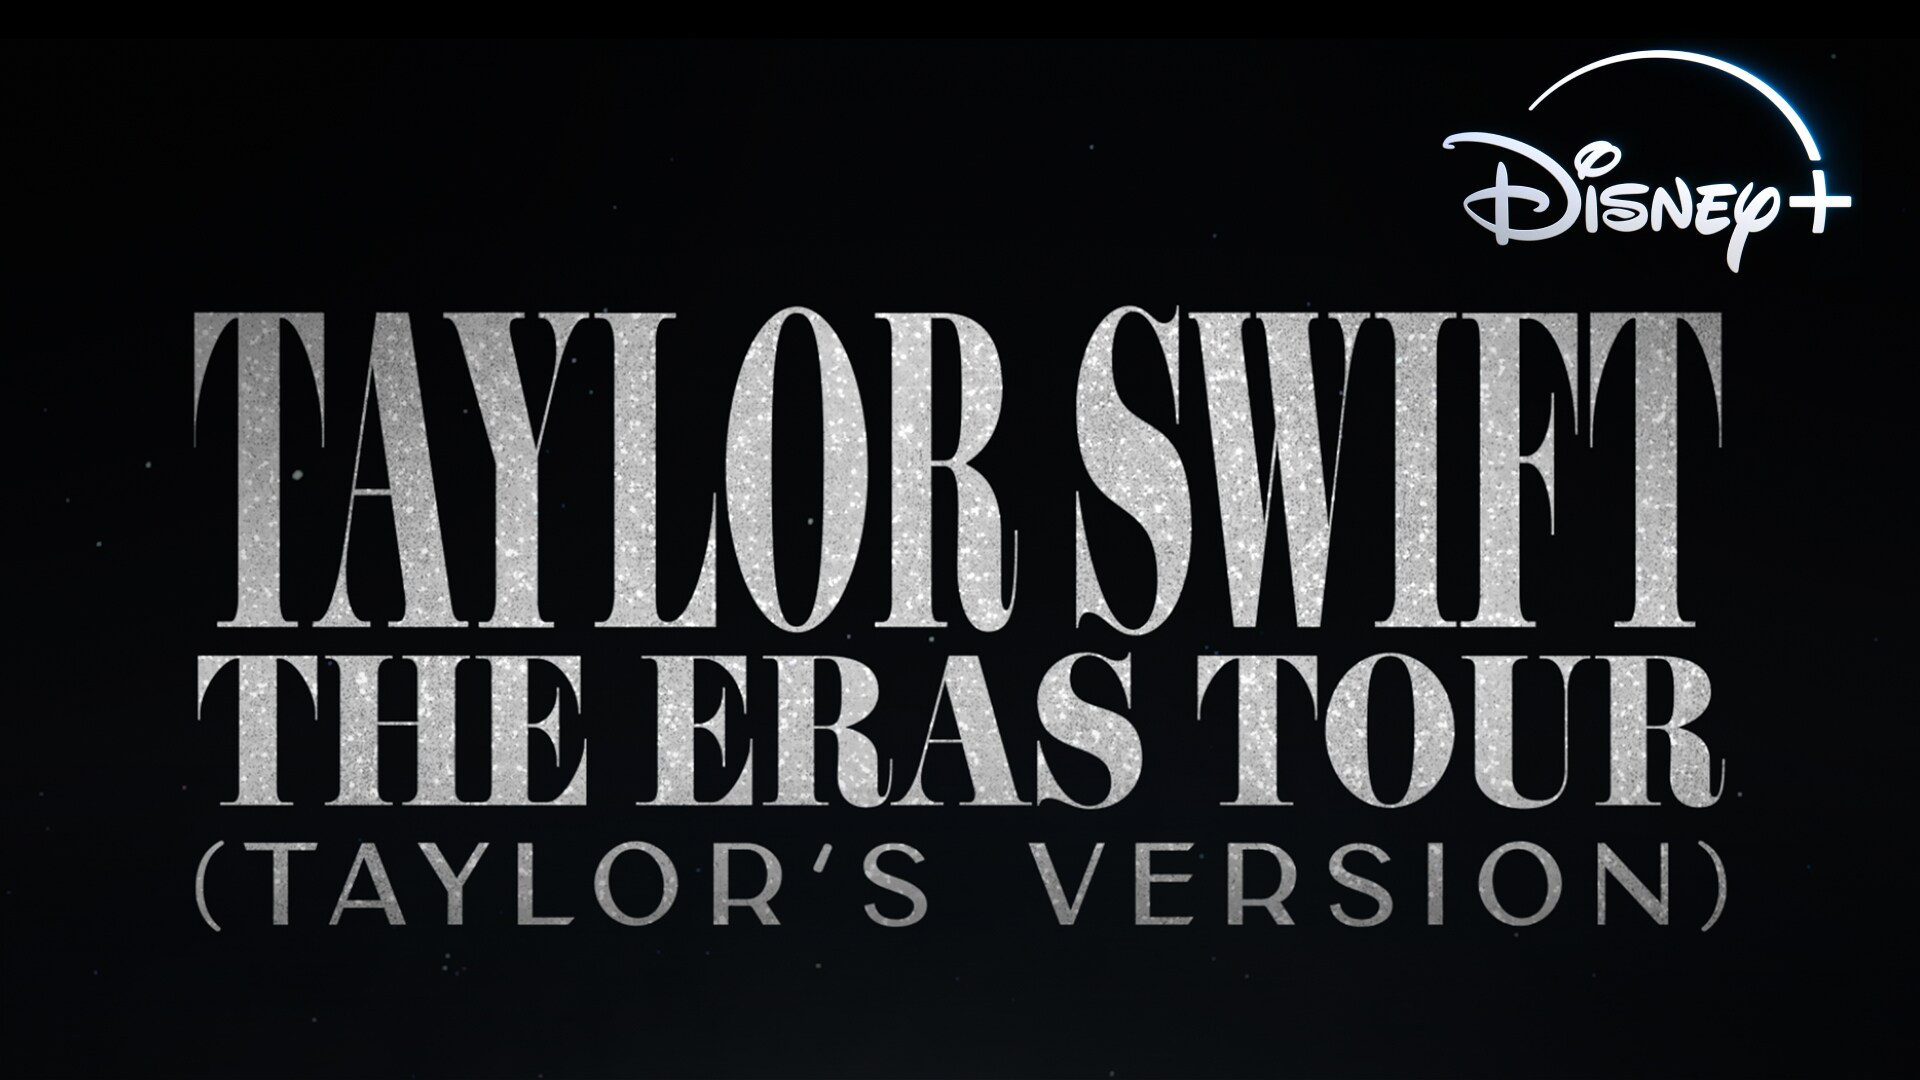 'cardigan' | Taylor Swift | The Eras Tour (Taylor’s Version) | Disney+